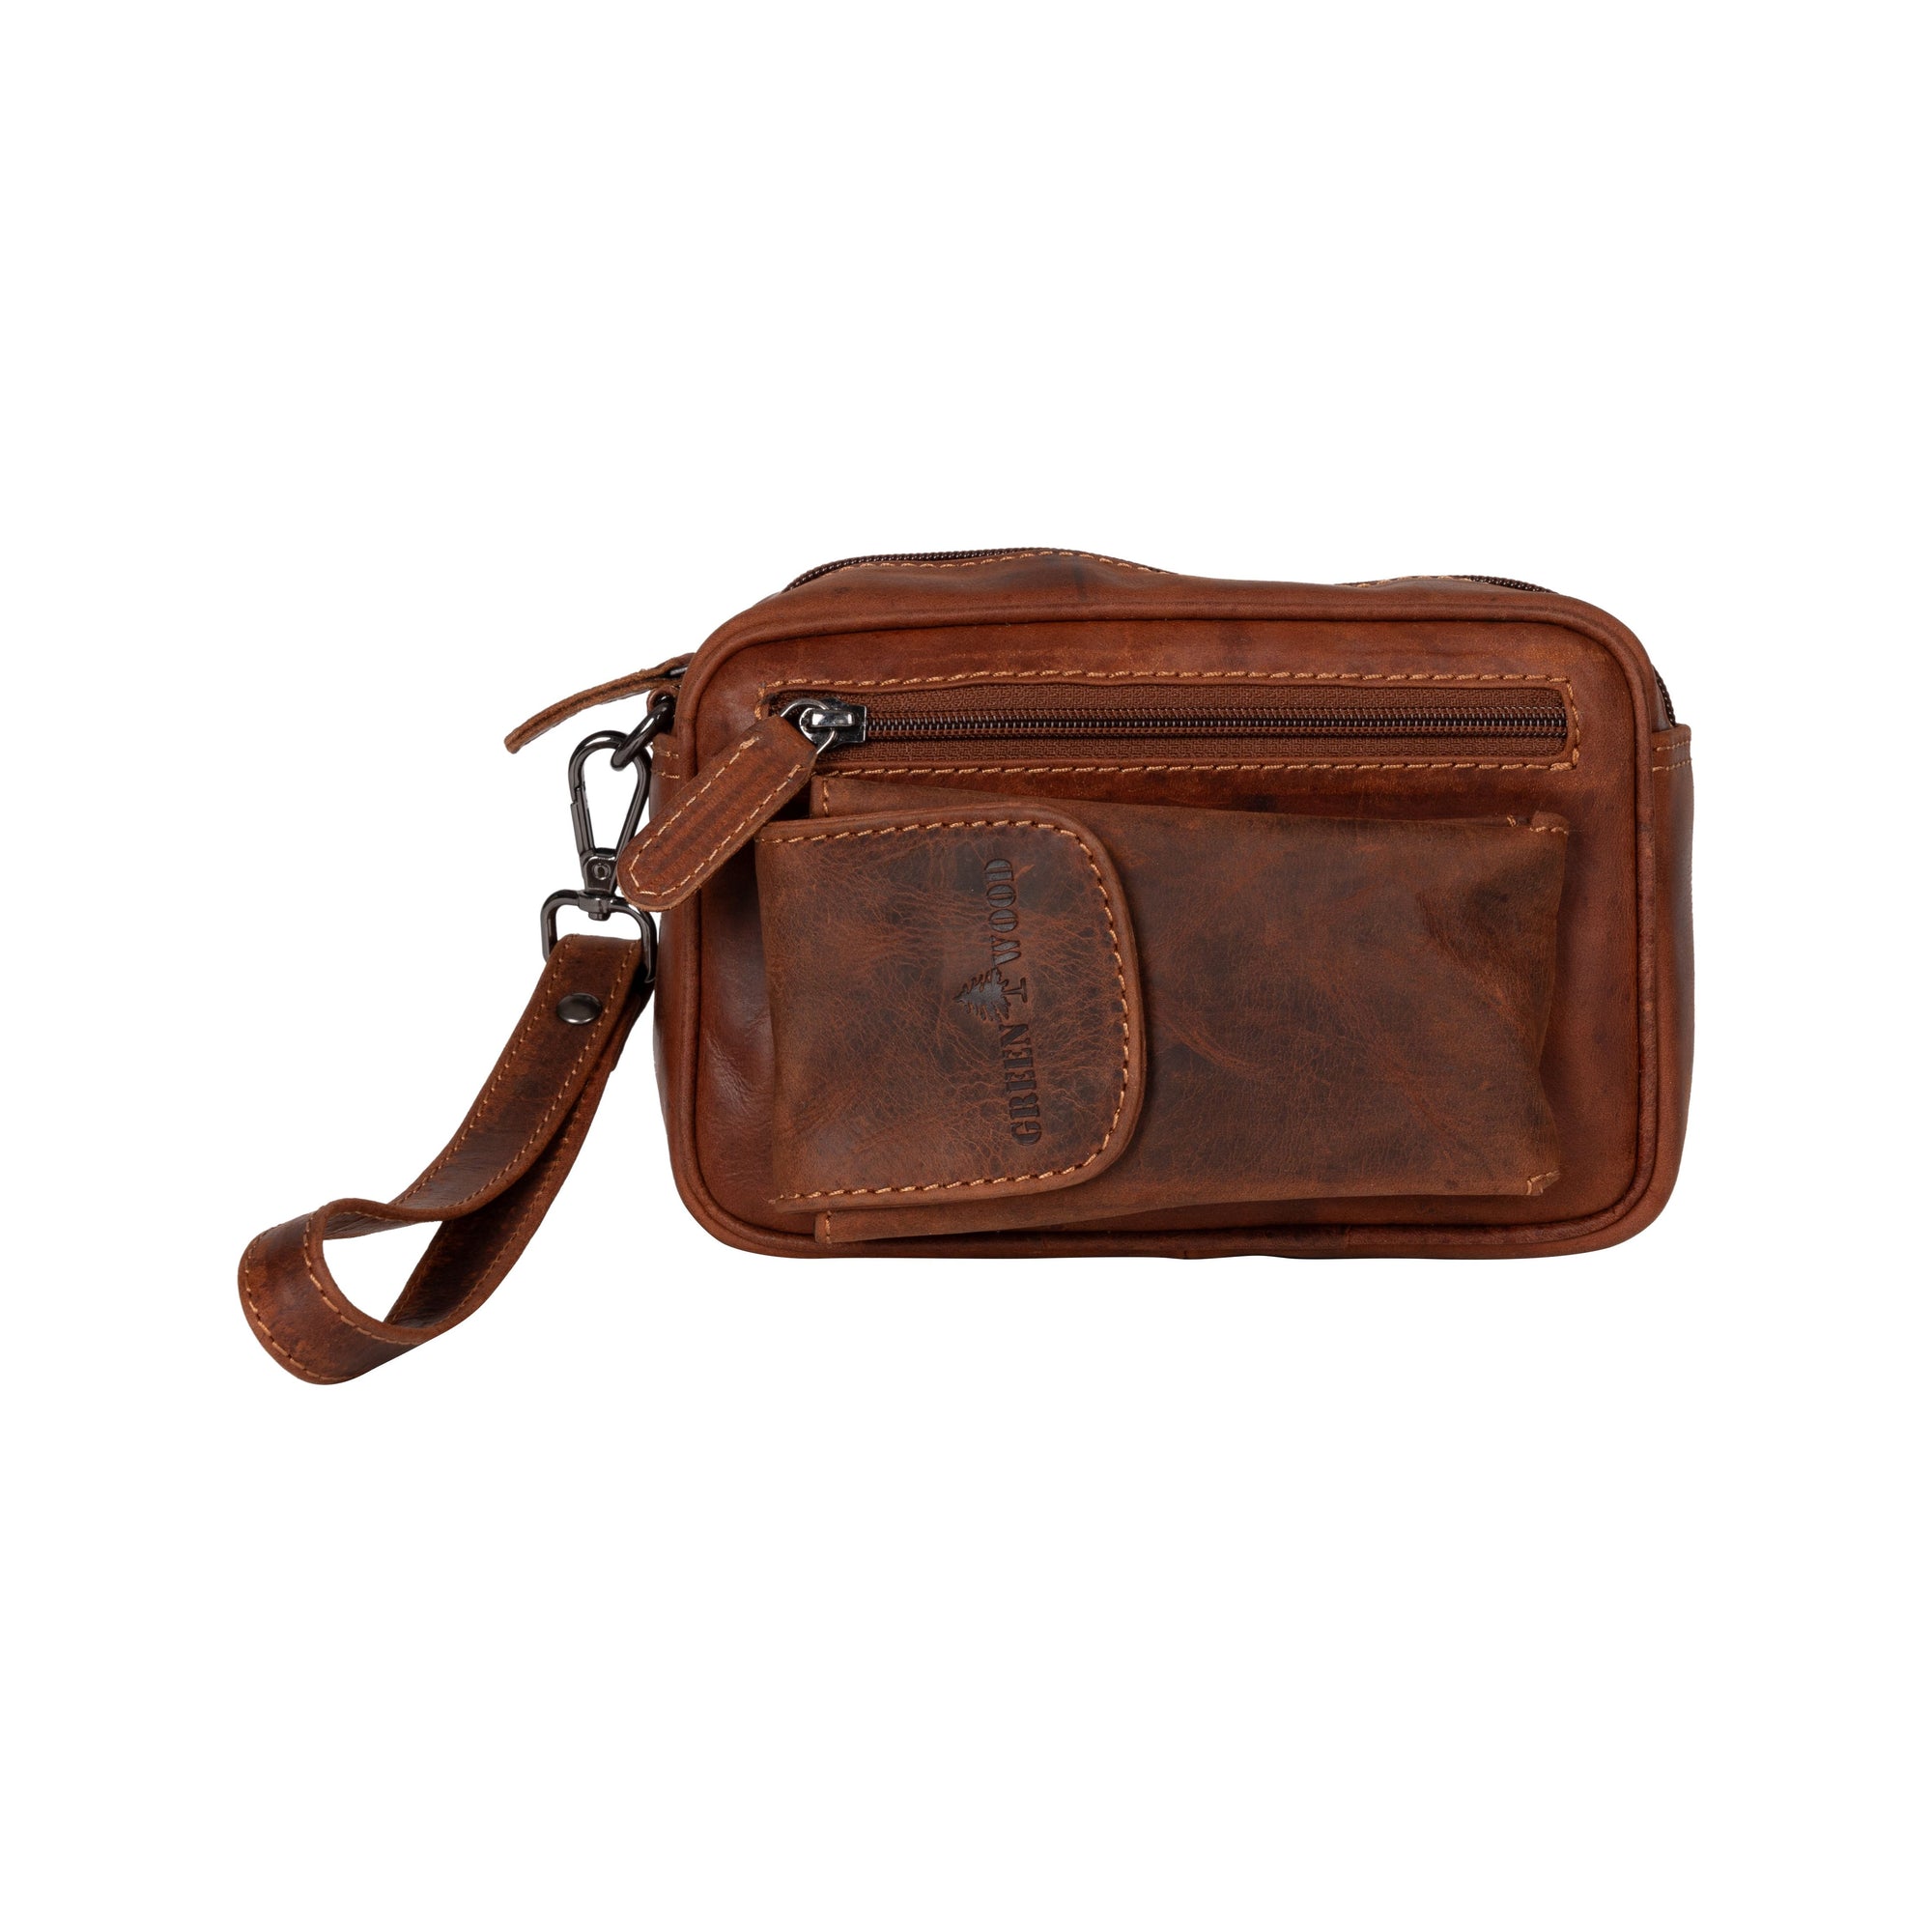 Leather Men's Wrist Bag Tamworth - Sandal - Leather Greenwood Bag | The Greenwood Leather Online Shop Australia